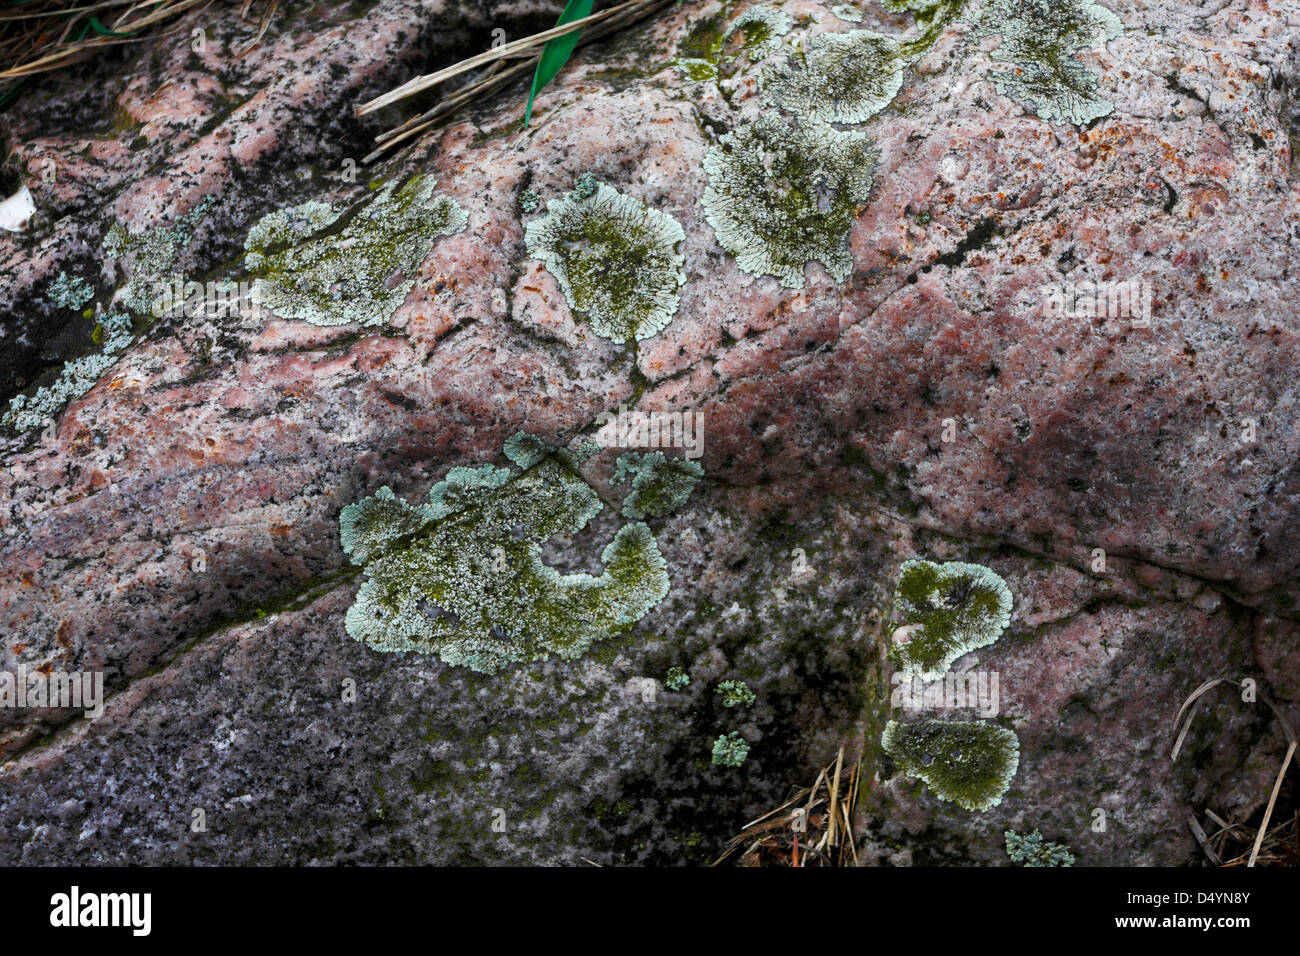 Green lichen growing on rose quartz glacial till stone. Stock Photo